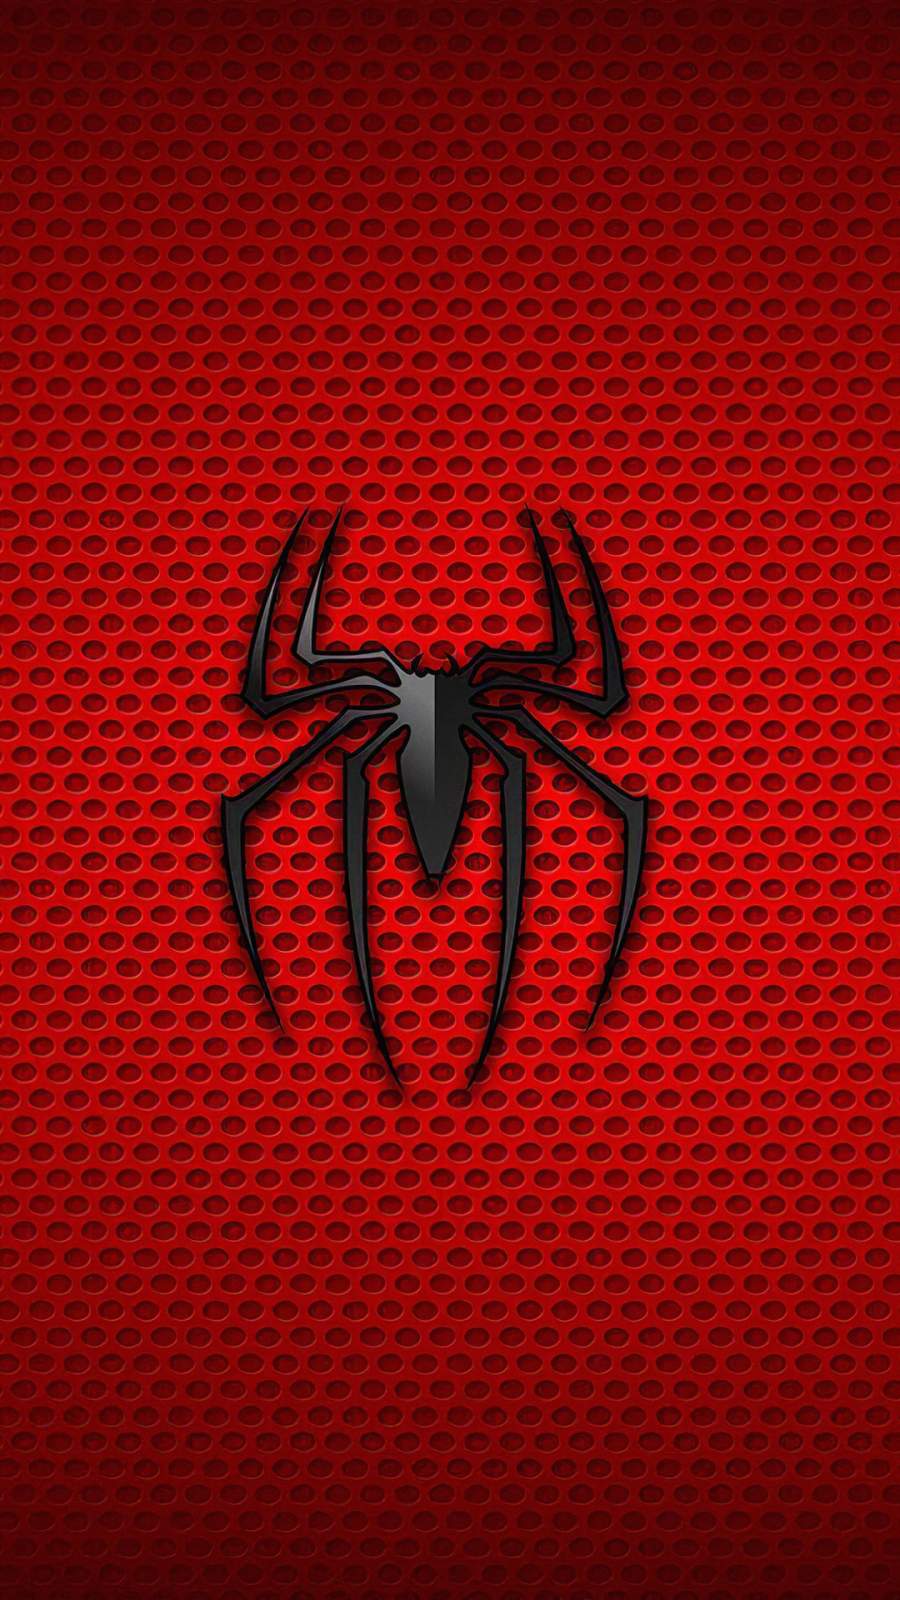 iPhone wallpaper  SpiderMan